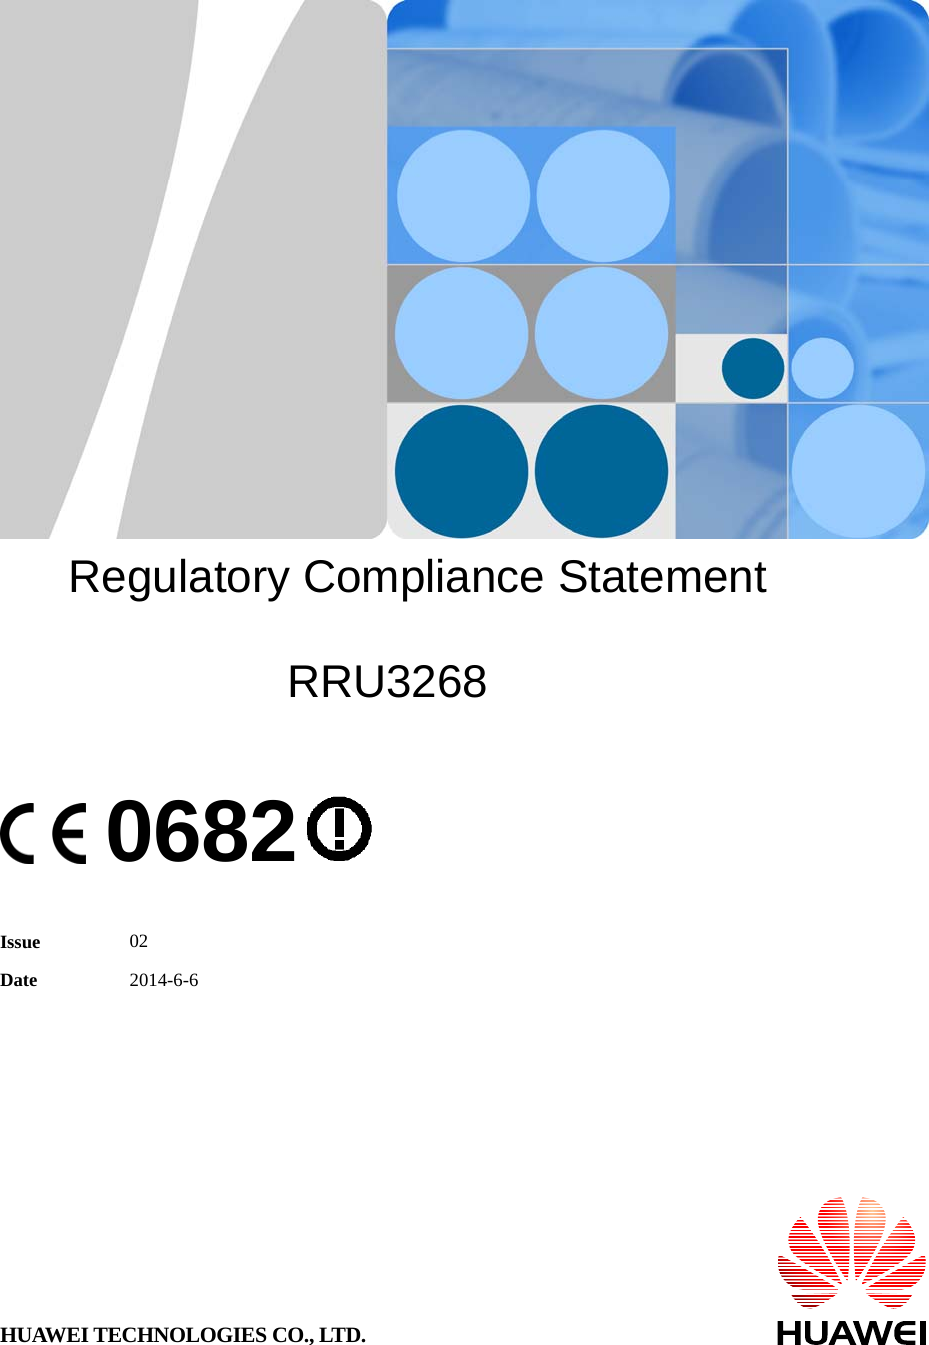        Regulatory Compliance Statement  RRU3268    0682   Issue  02 Date  2014-6-6 HUAWEI TECHNOLOGIES CO., LTD. 